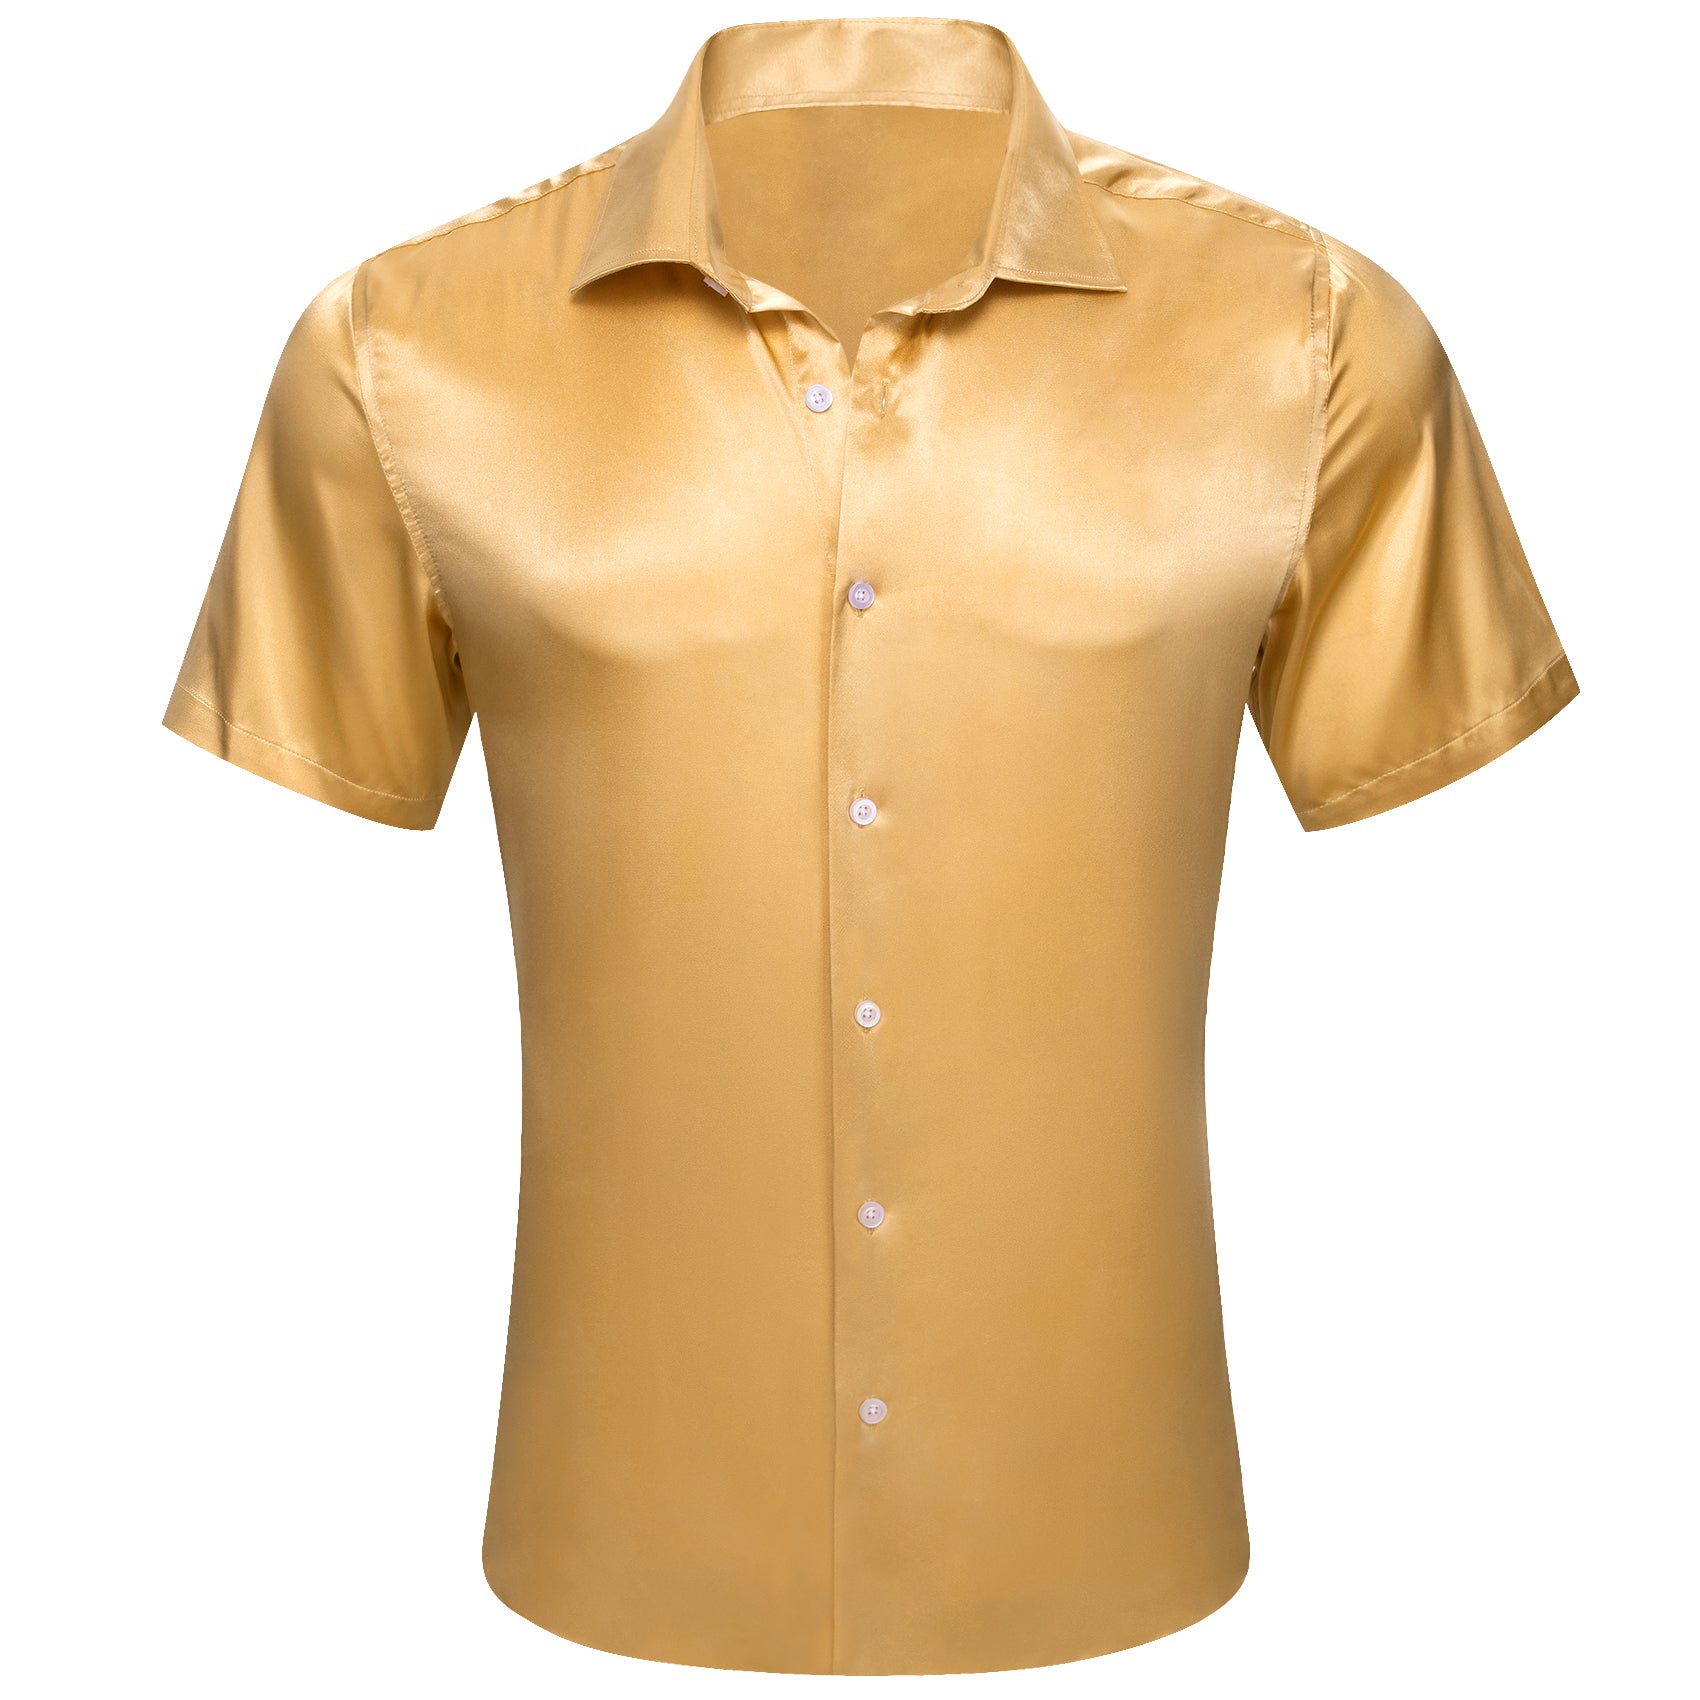 Barry wang gold shirts dress shirt men